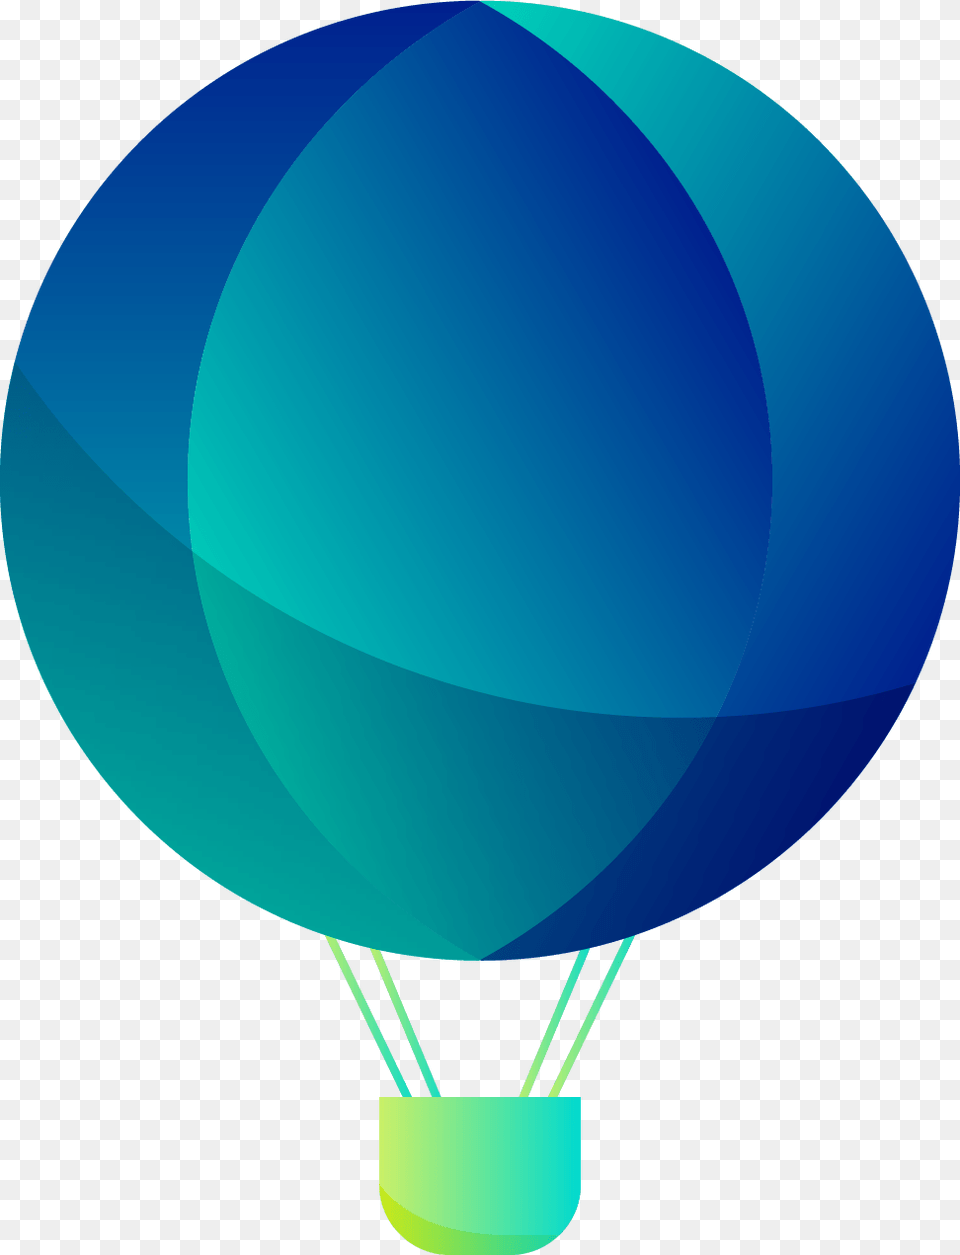 Hot Air Balloon, Sphere, Aircraft, Transportation, Vehicle Png